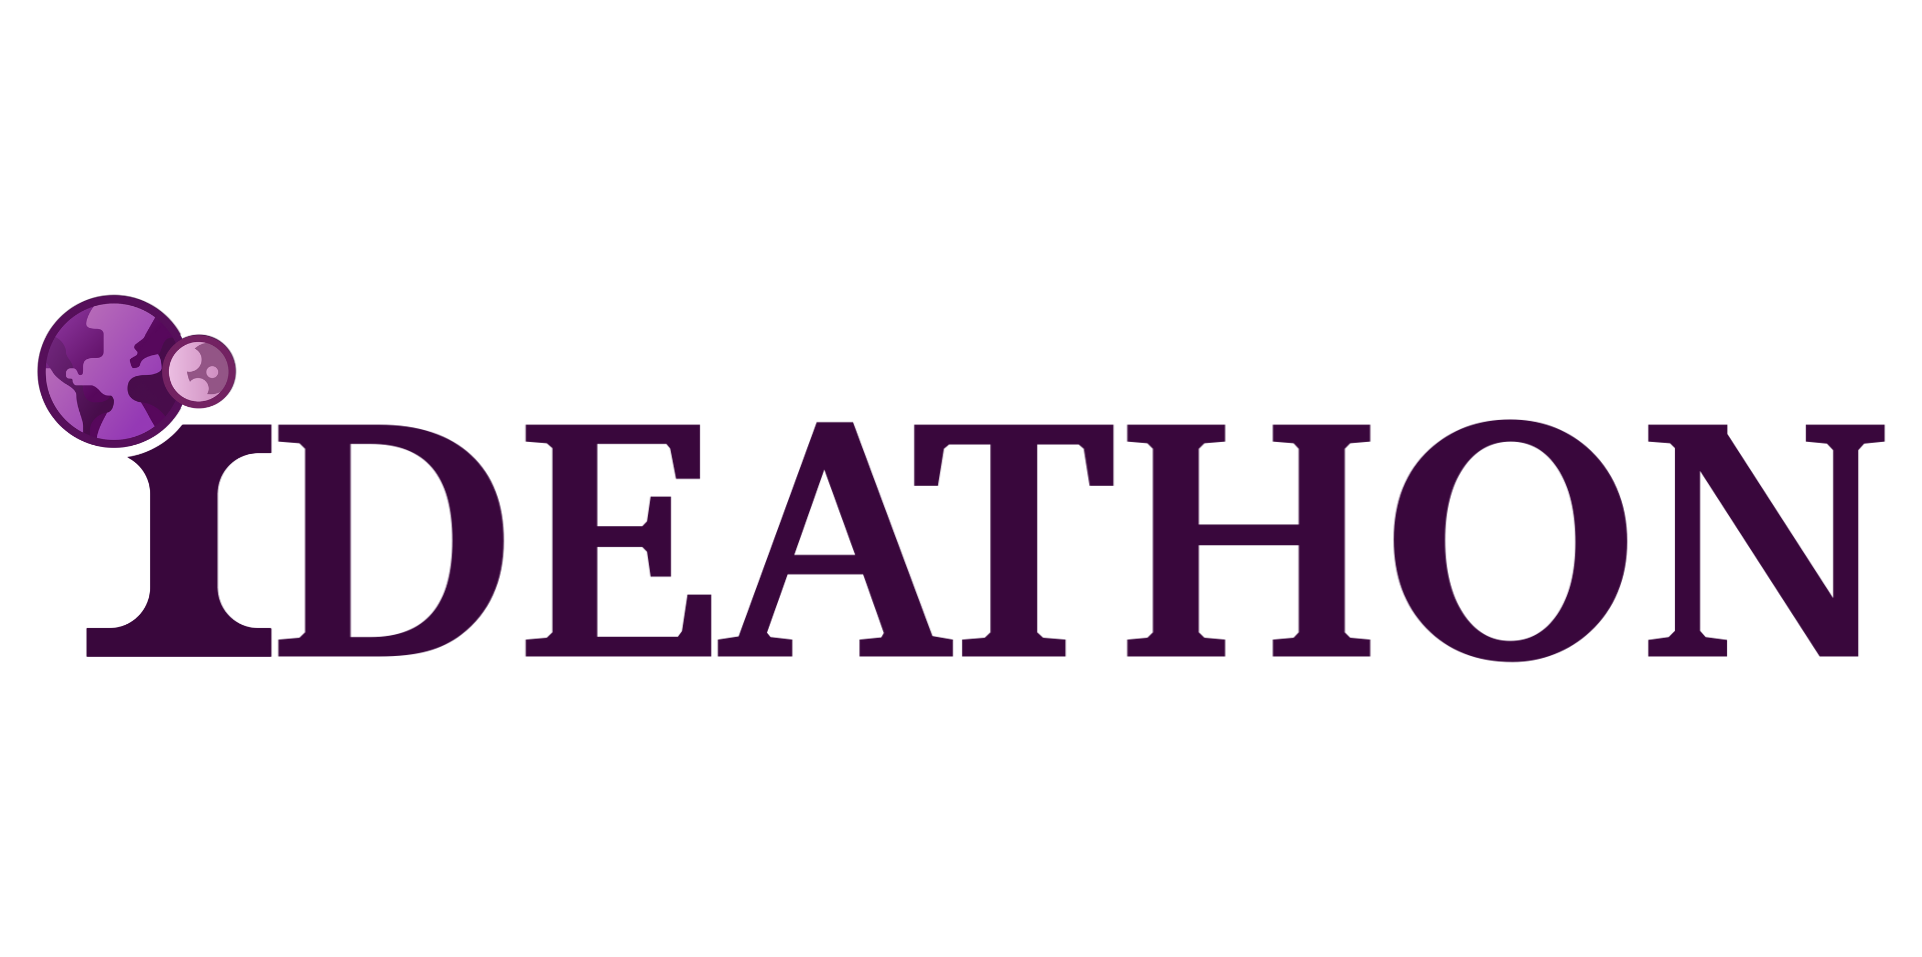 Logo IDEATHON viola